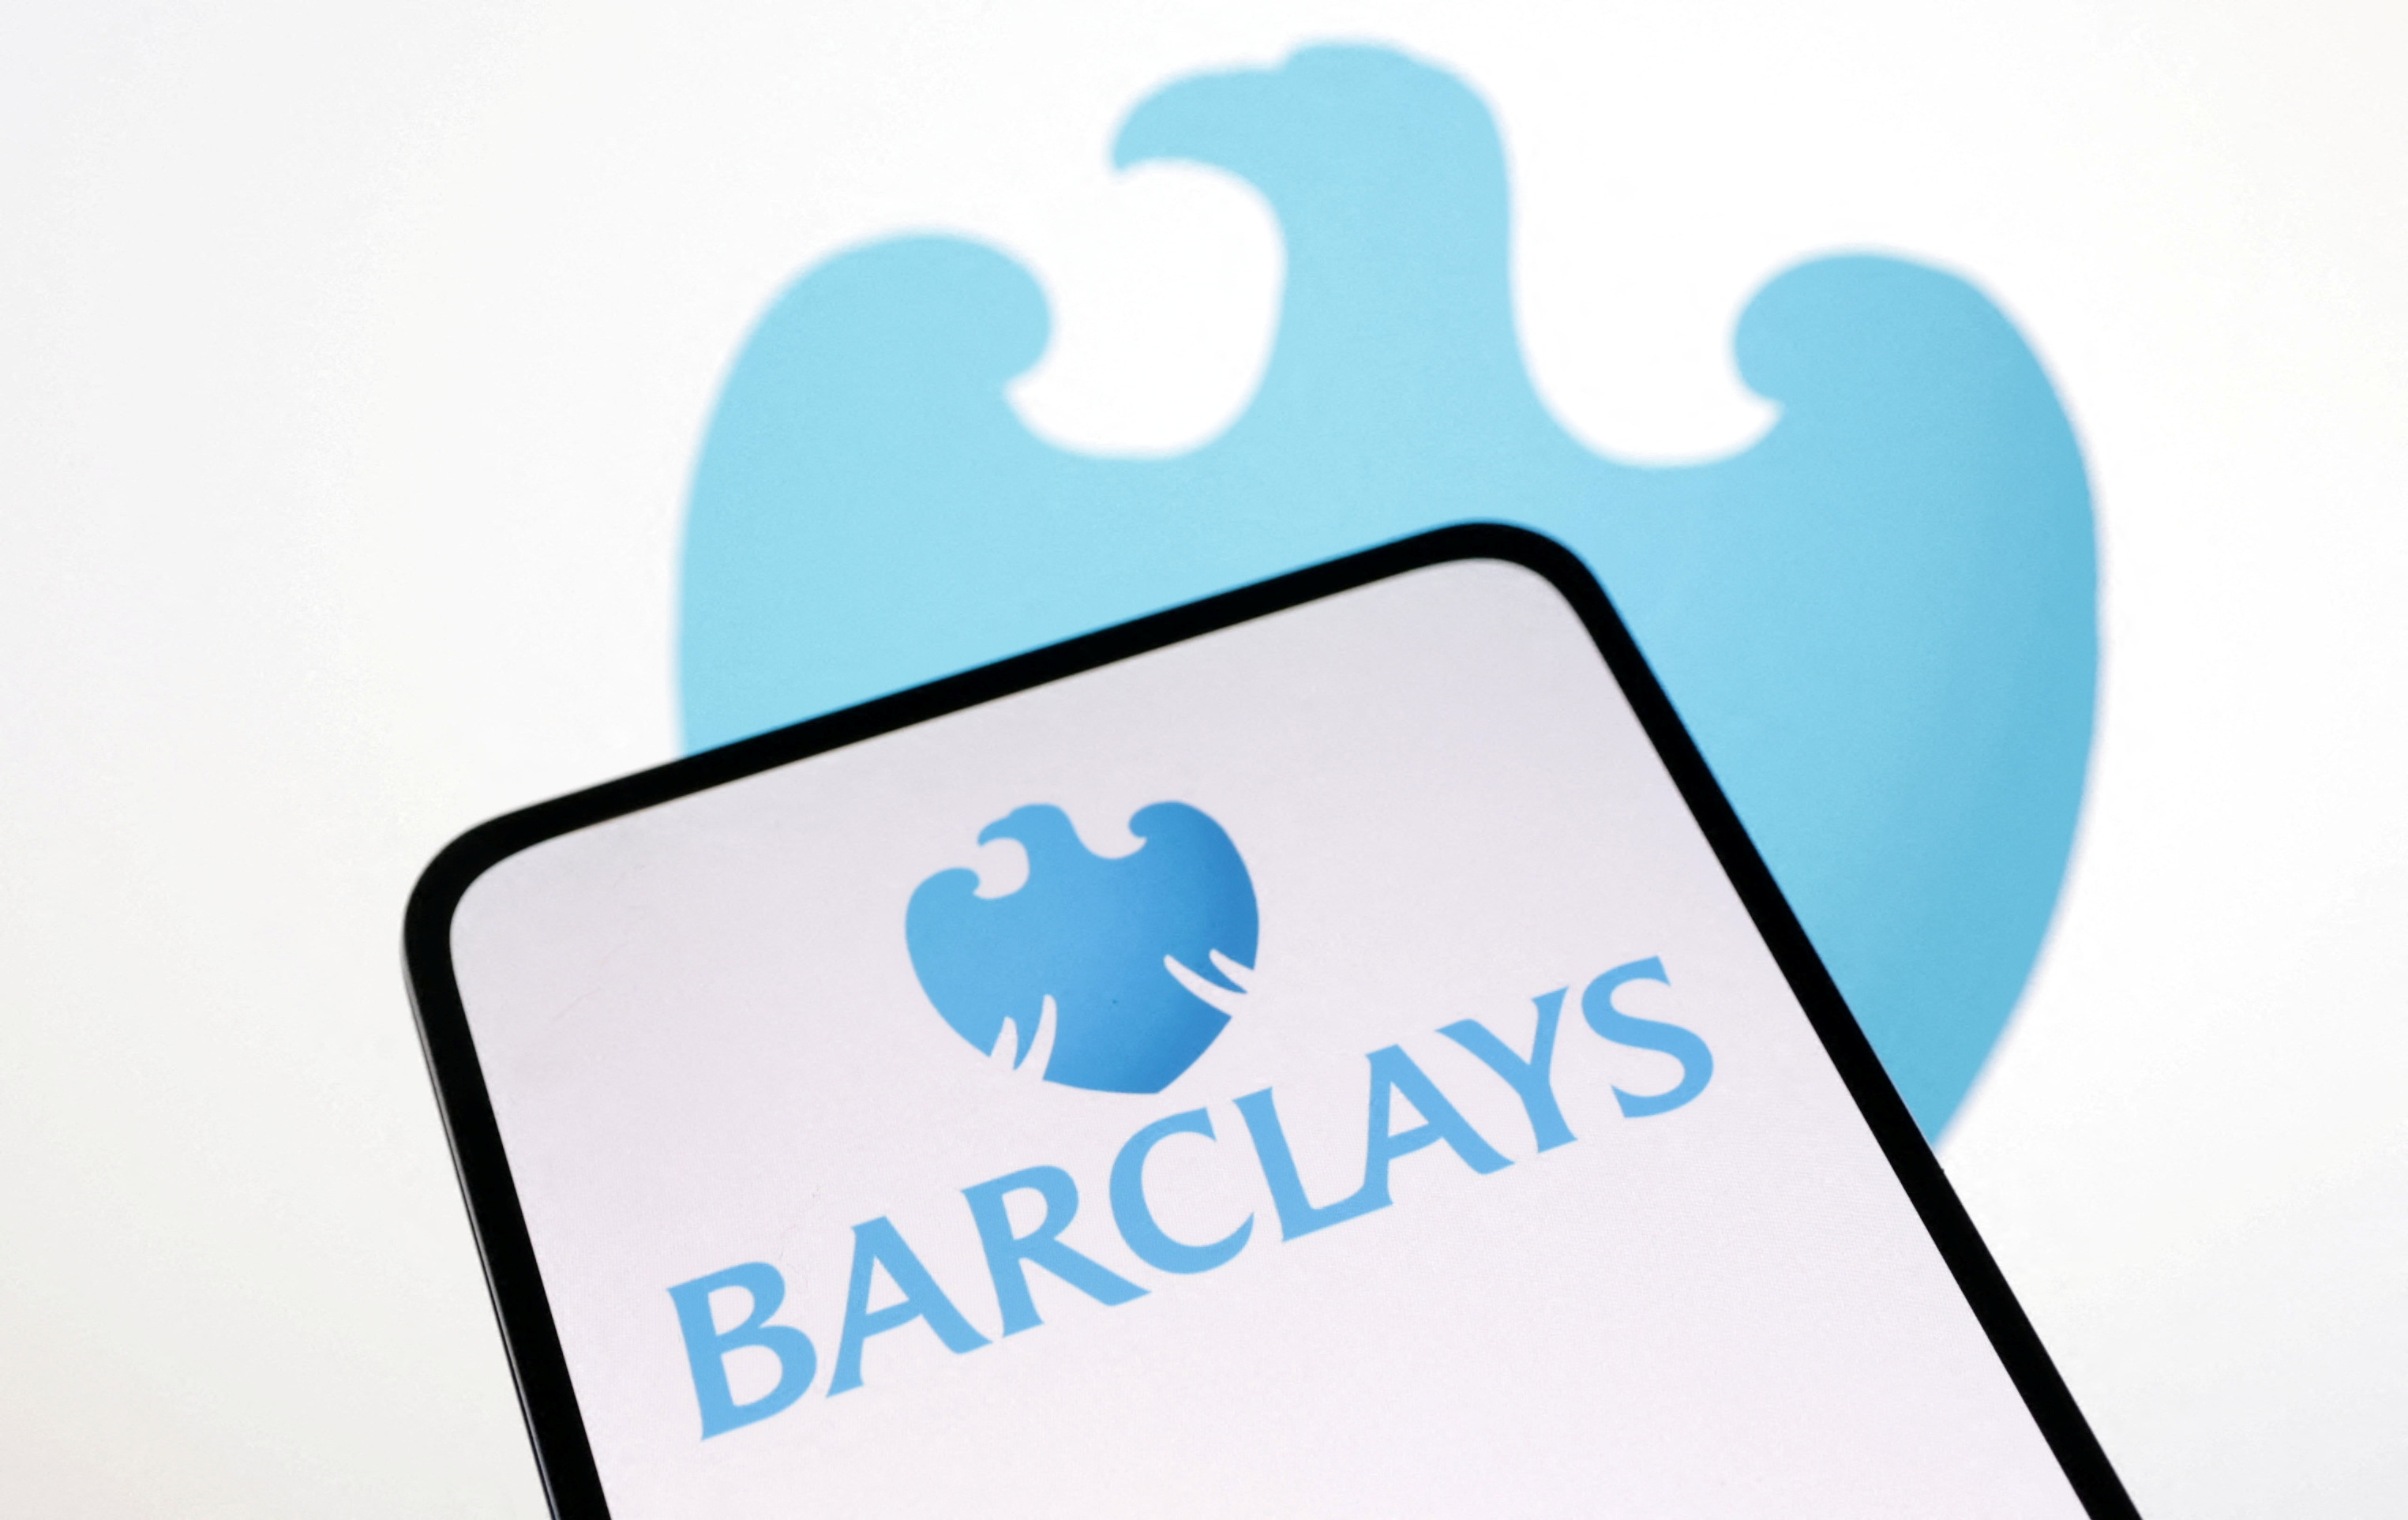 Illustration shows Barclays Bank logo